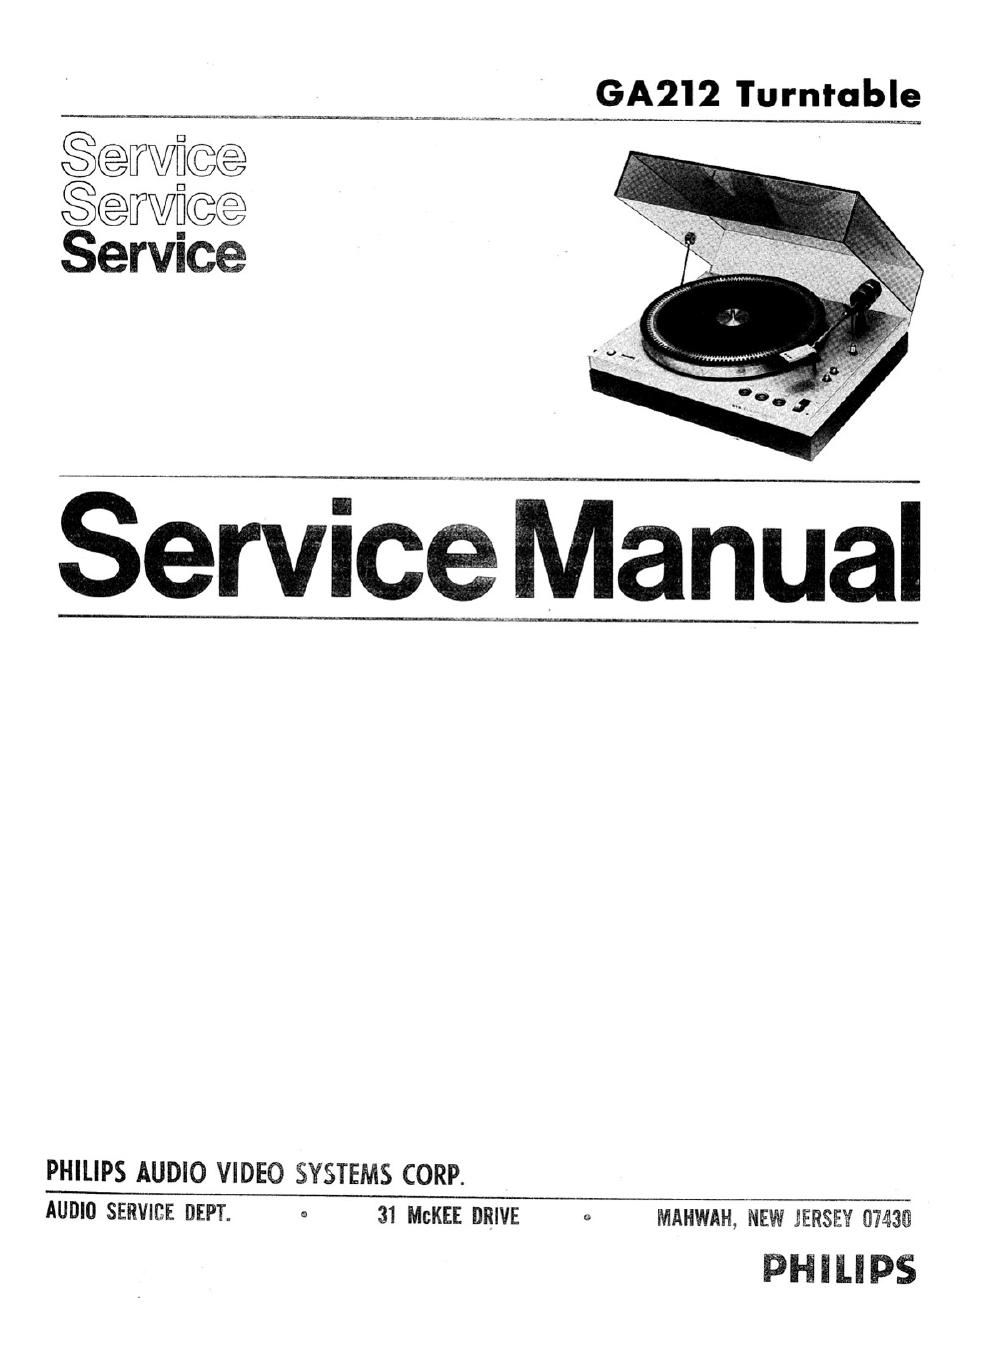 philips ga 212 service manual